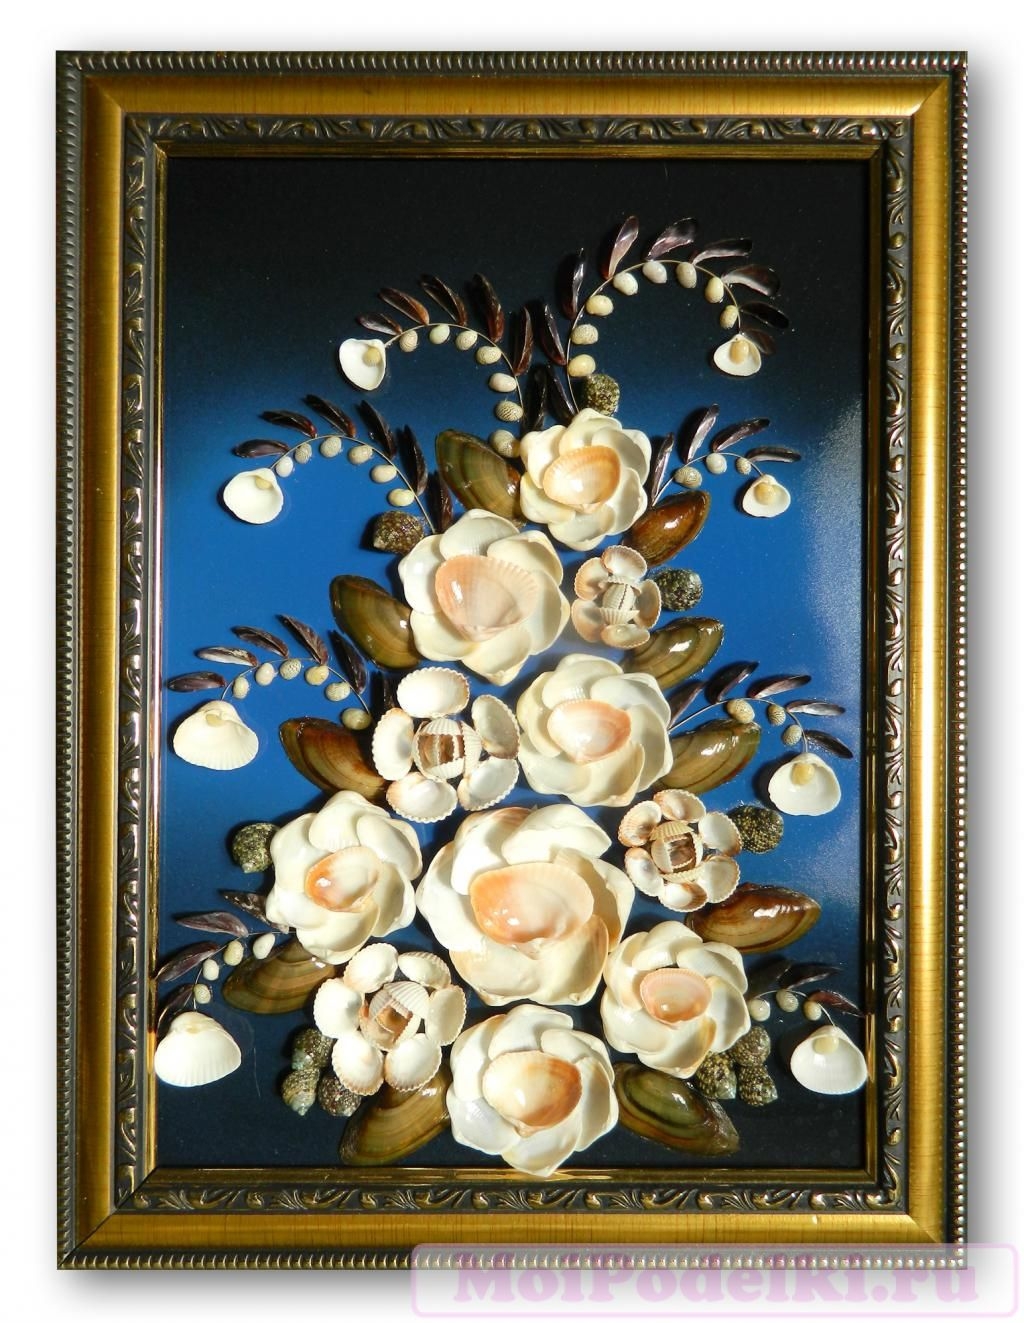 Настенная картина на холсте с изображением морских ракушек и цветов